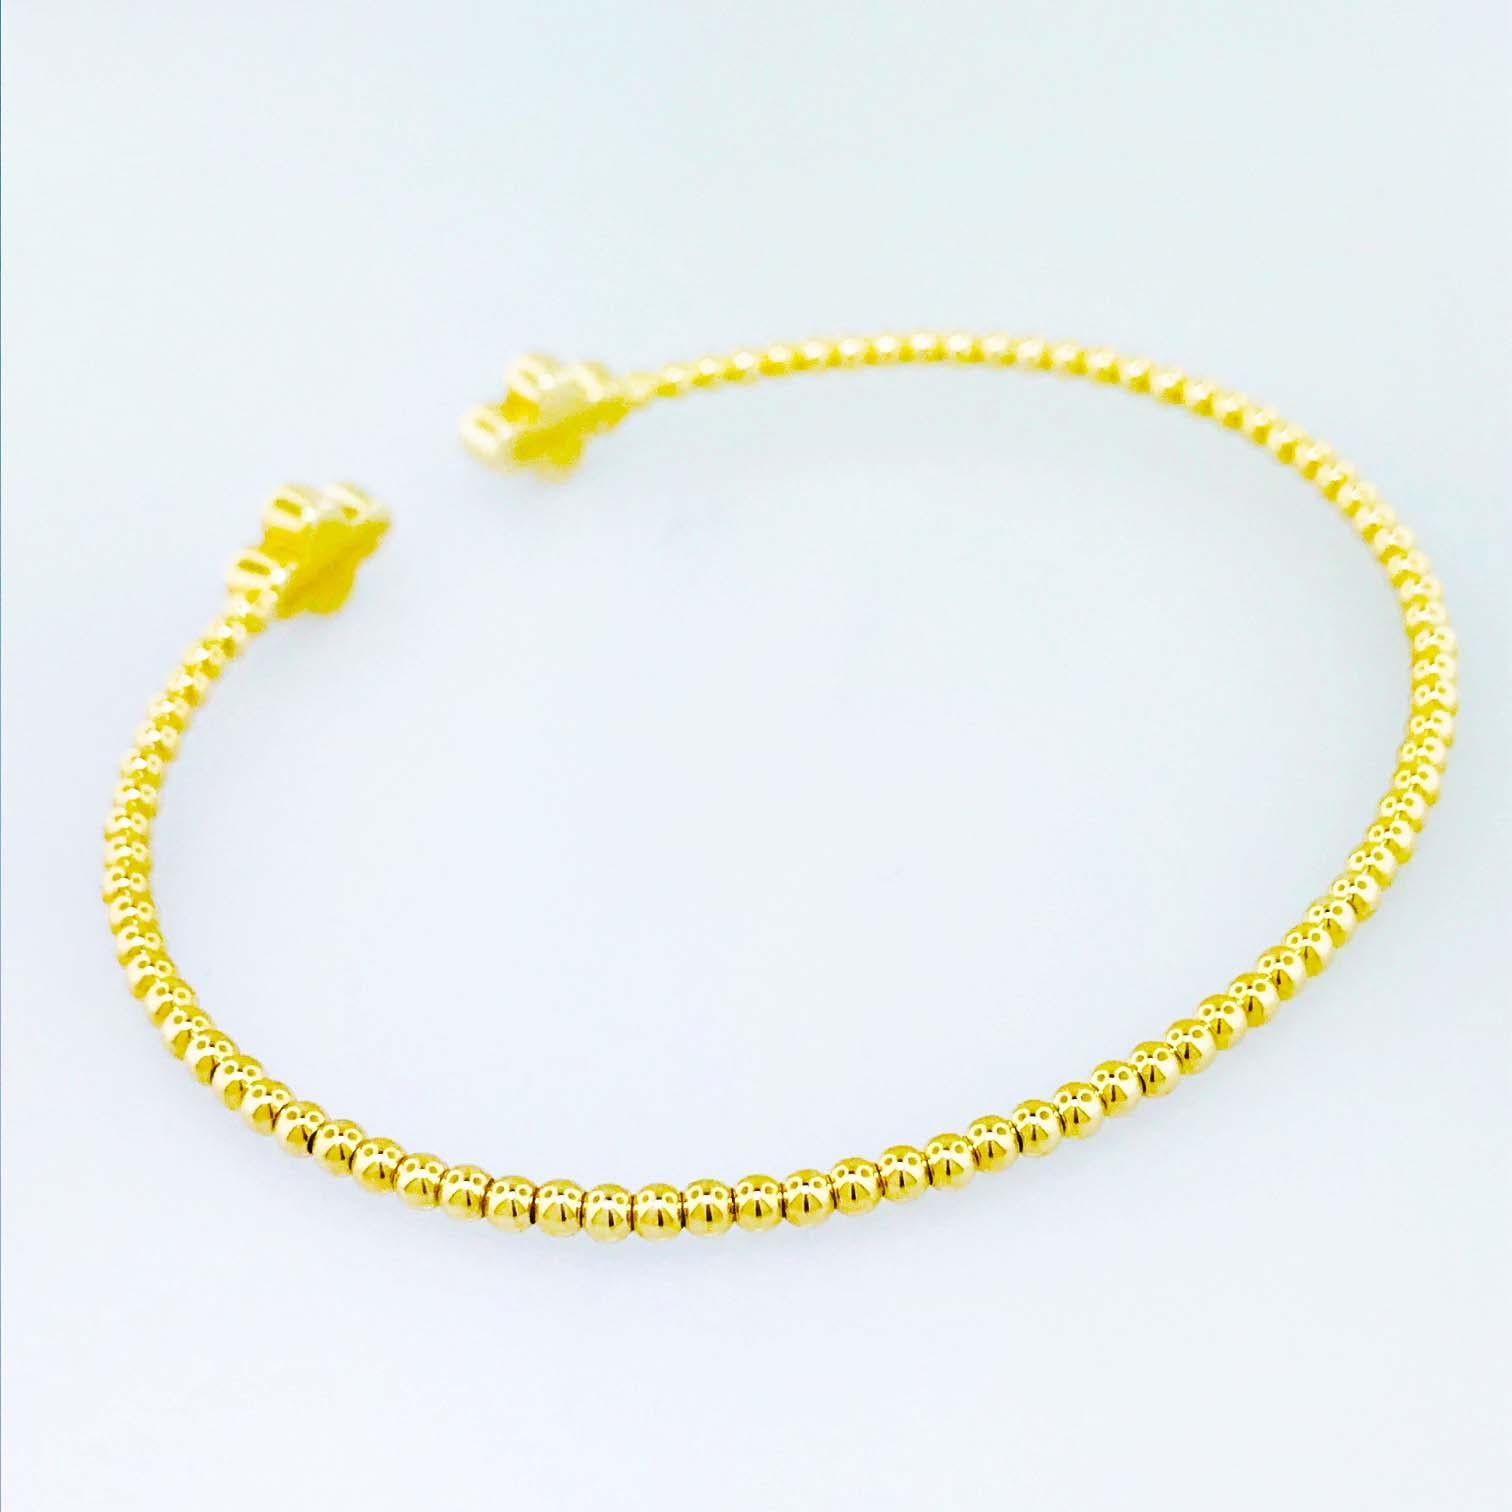 Women's .41 Carat Diamond Fashion Bangle Bracelet in 14 Karat Yellow Gold